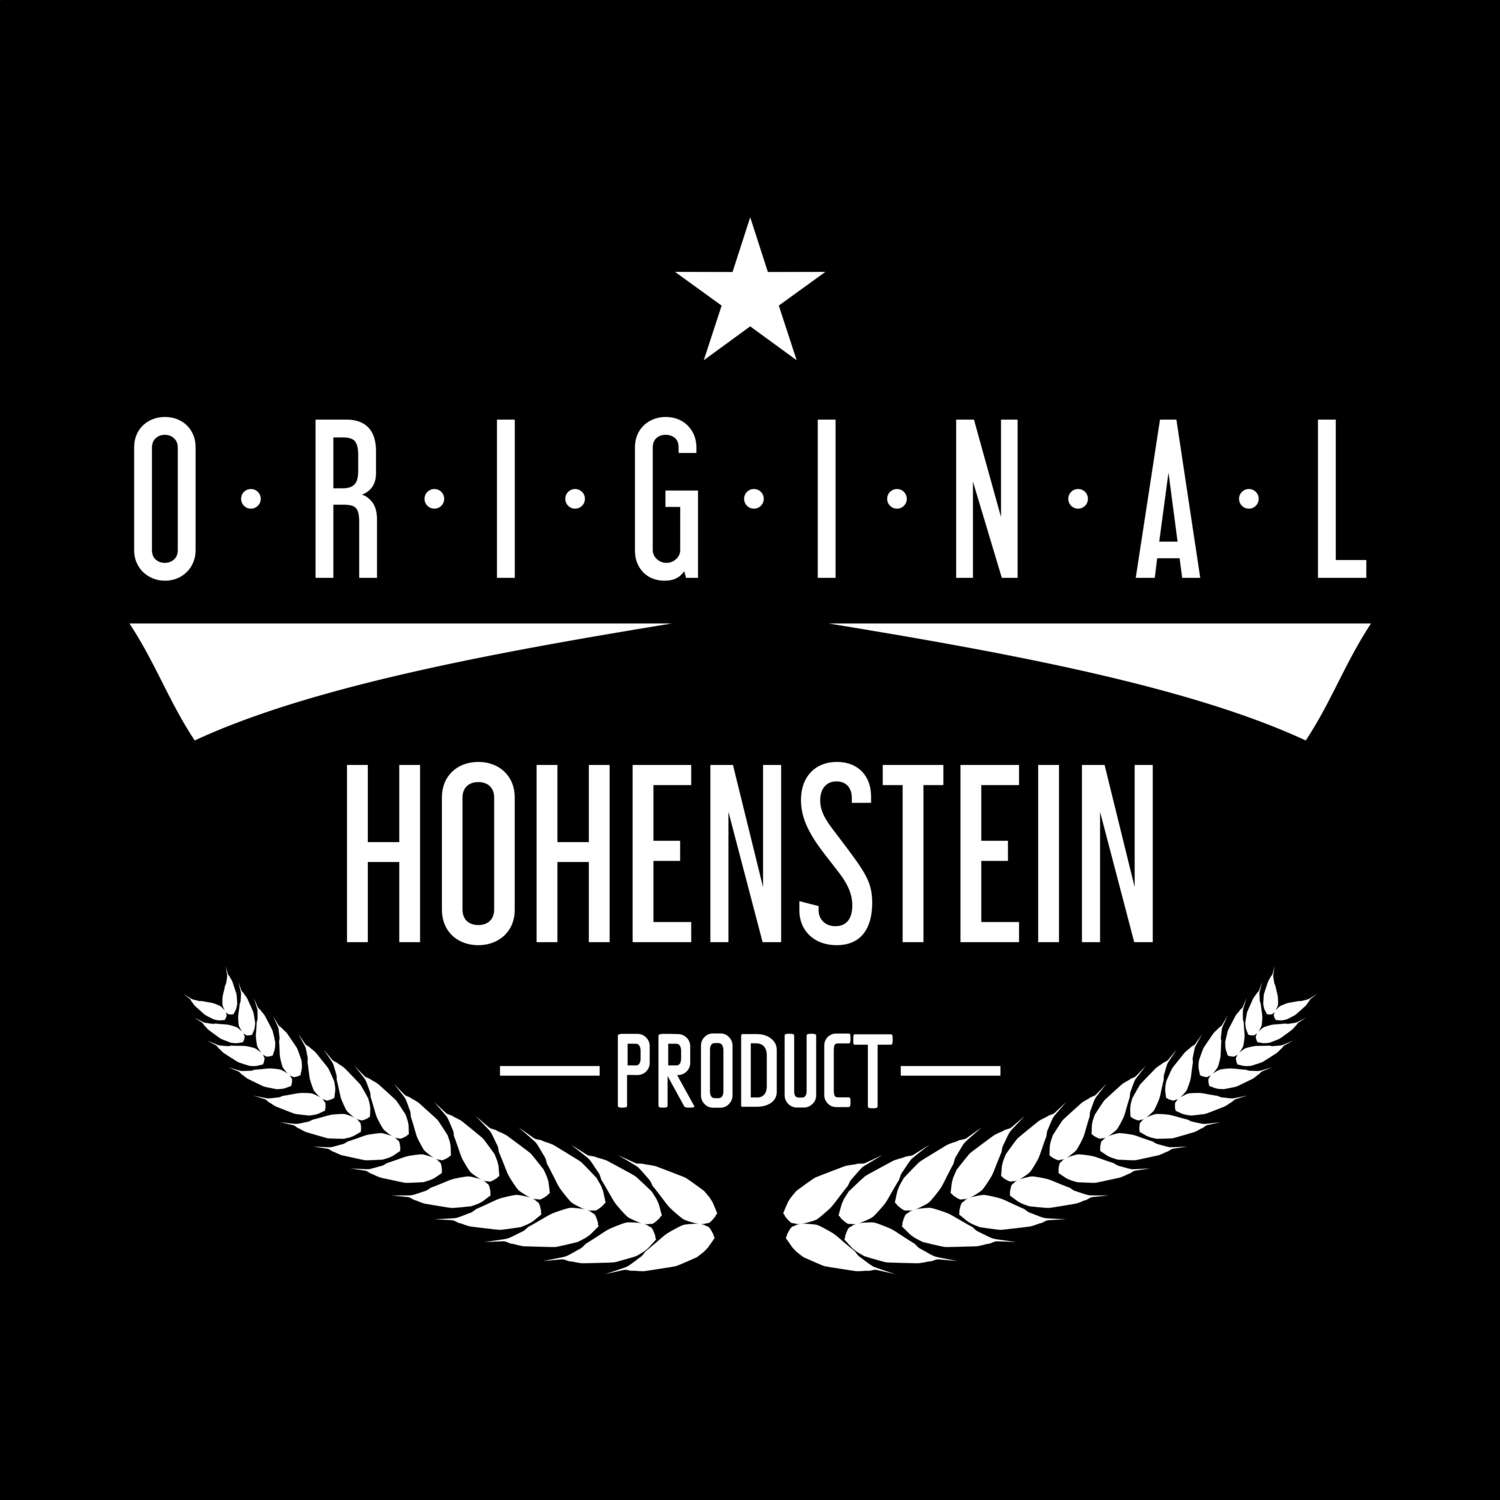 Hohenstein T-Shirt »Original Product«